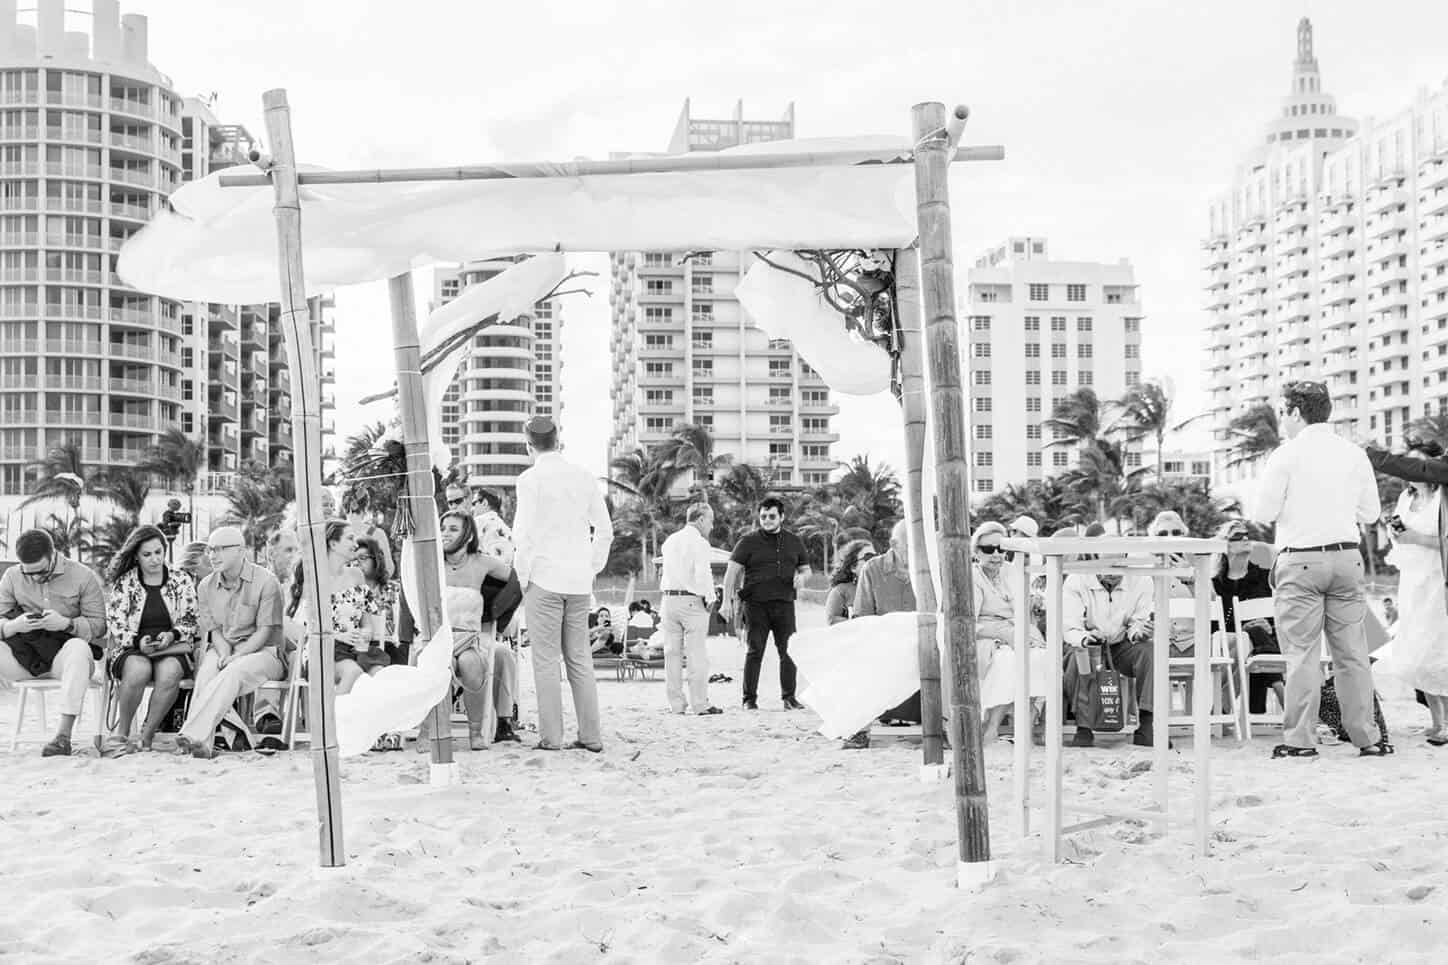 Jewish wedding ceremony on the beach by wedding photographer in Miami beach